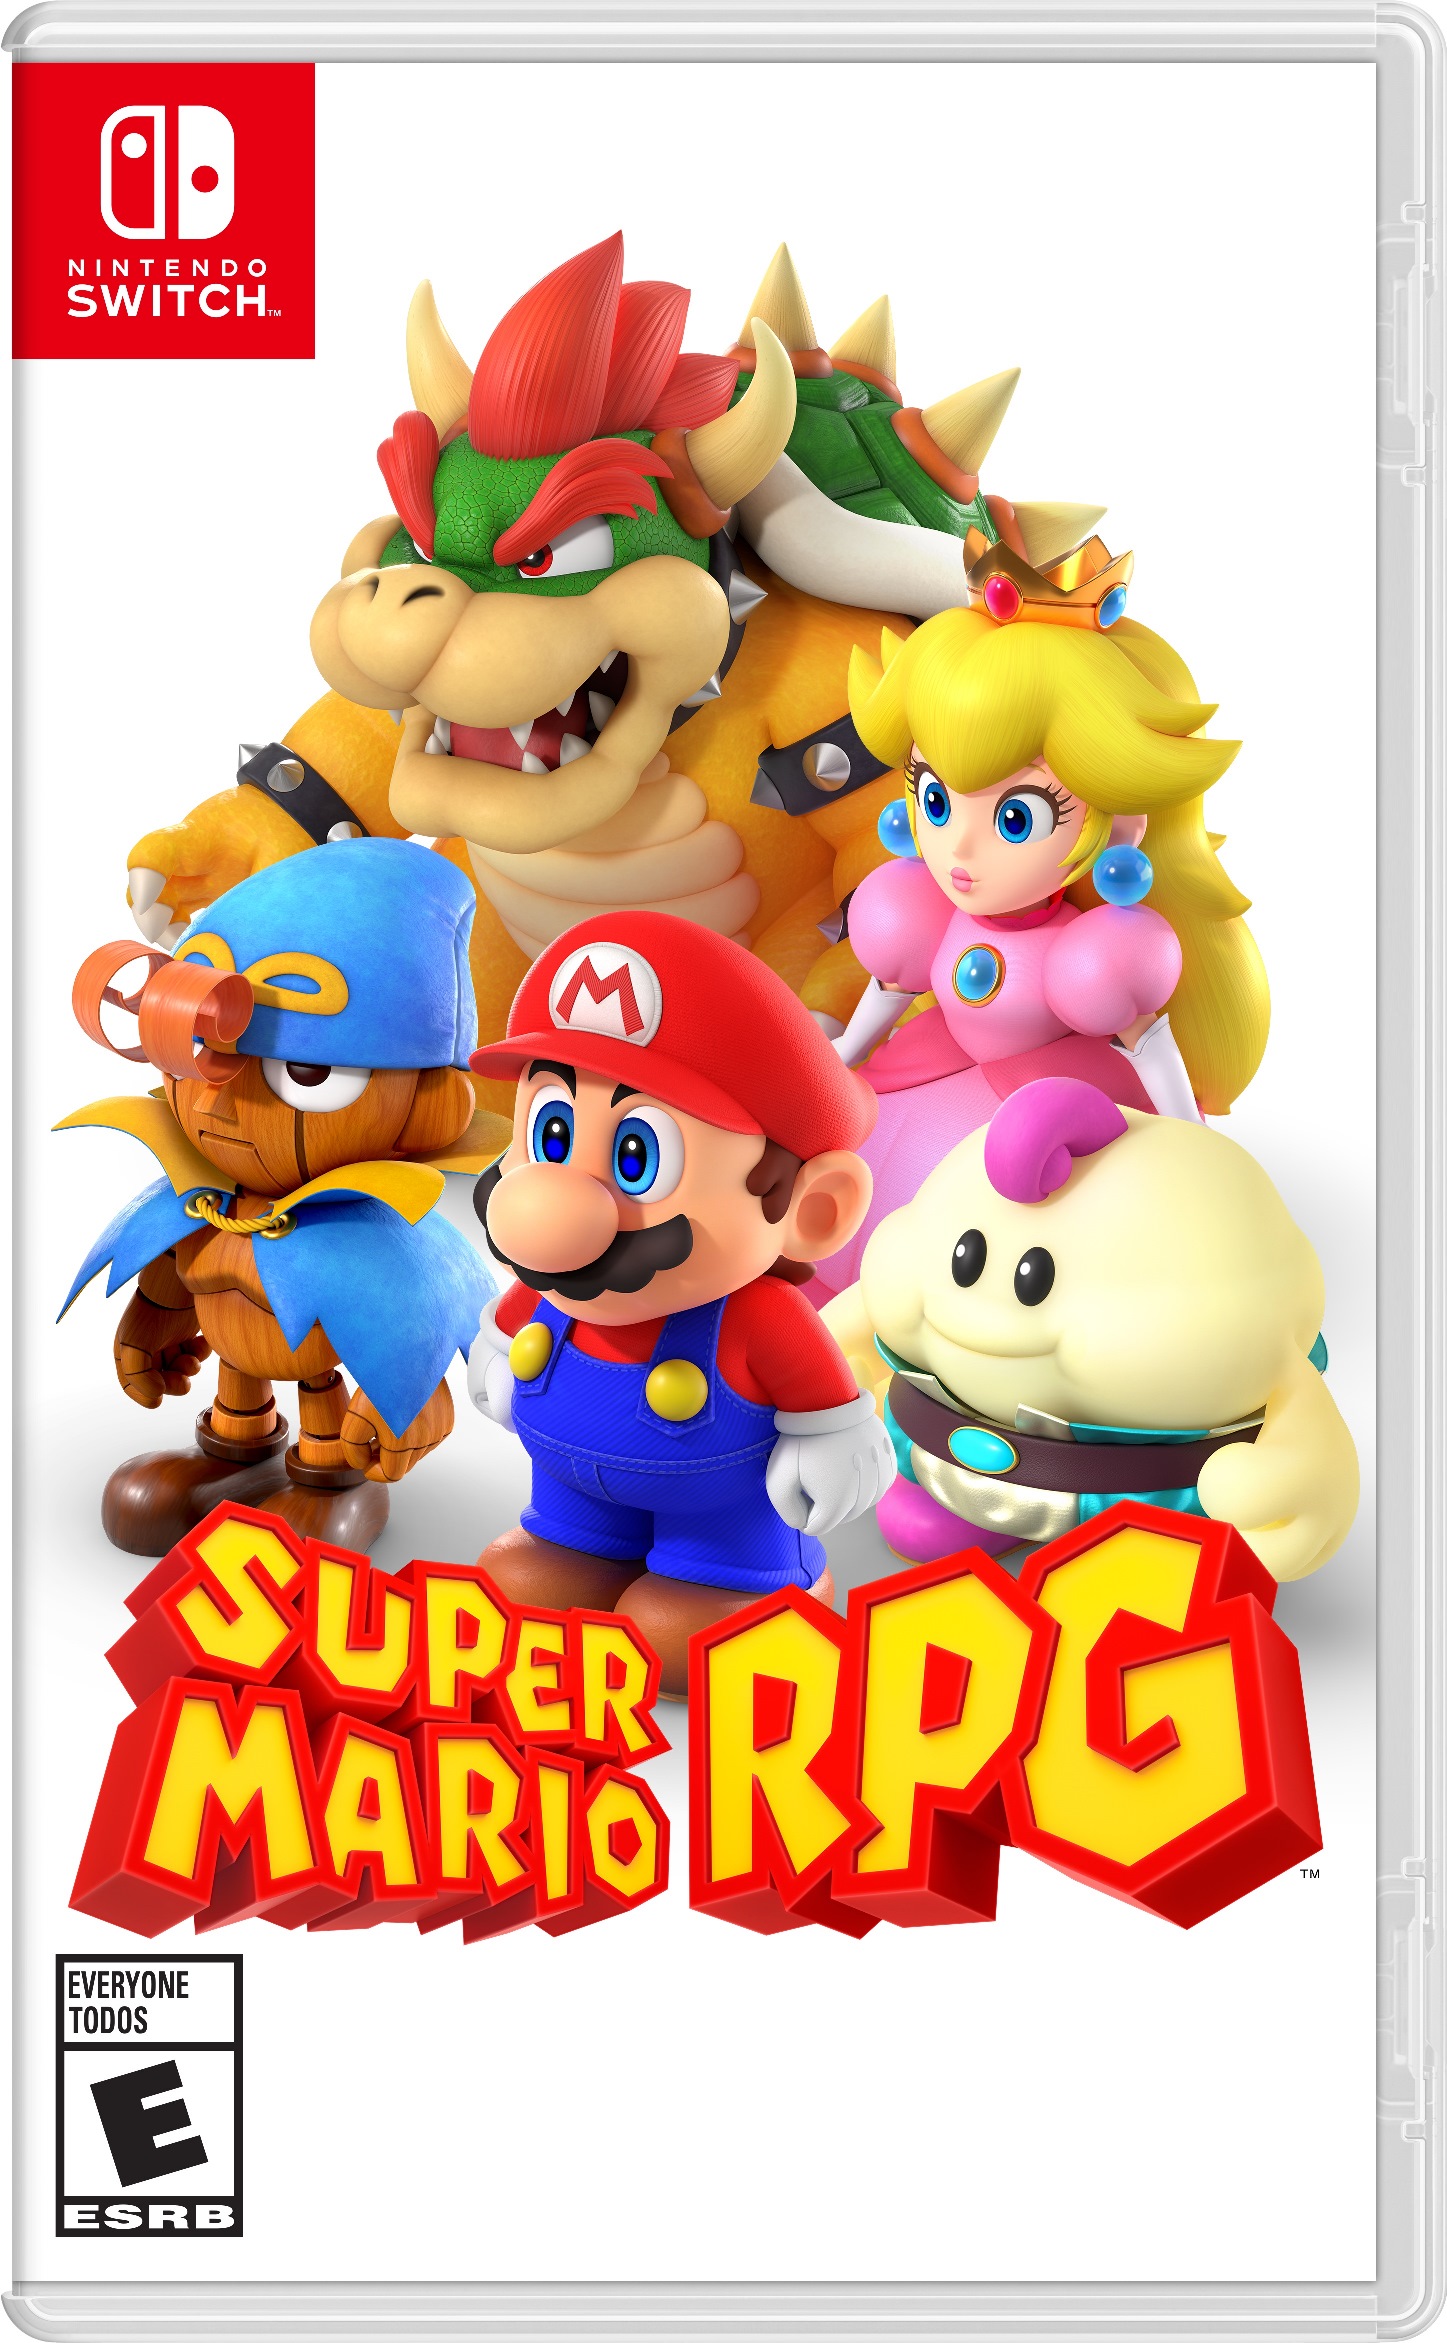 Super-Mario-RPG-boxart.jpg